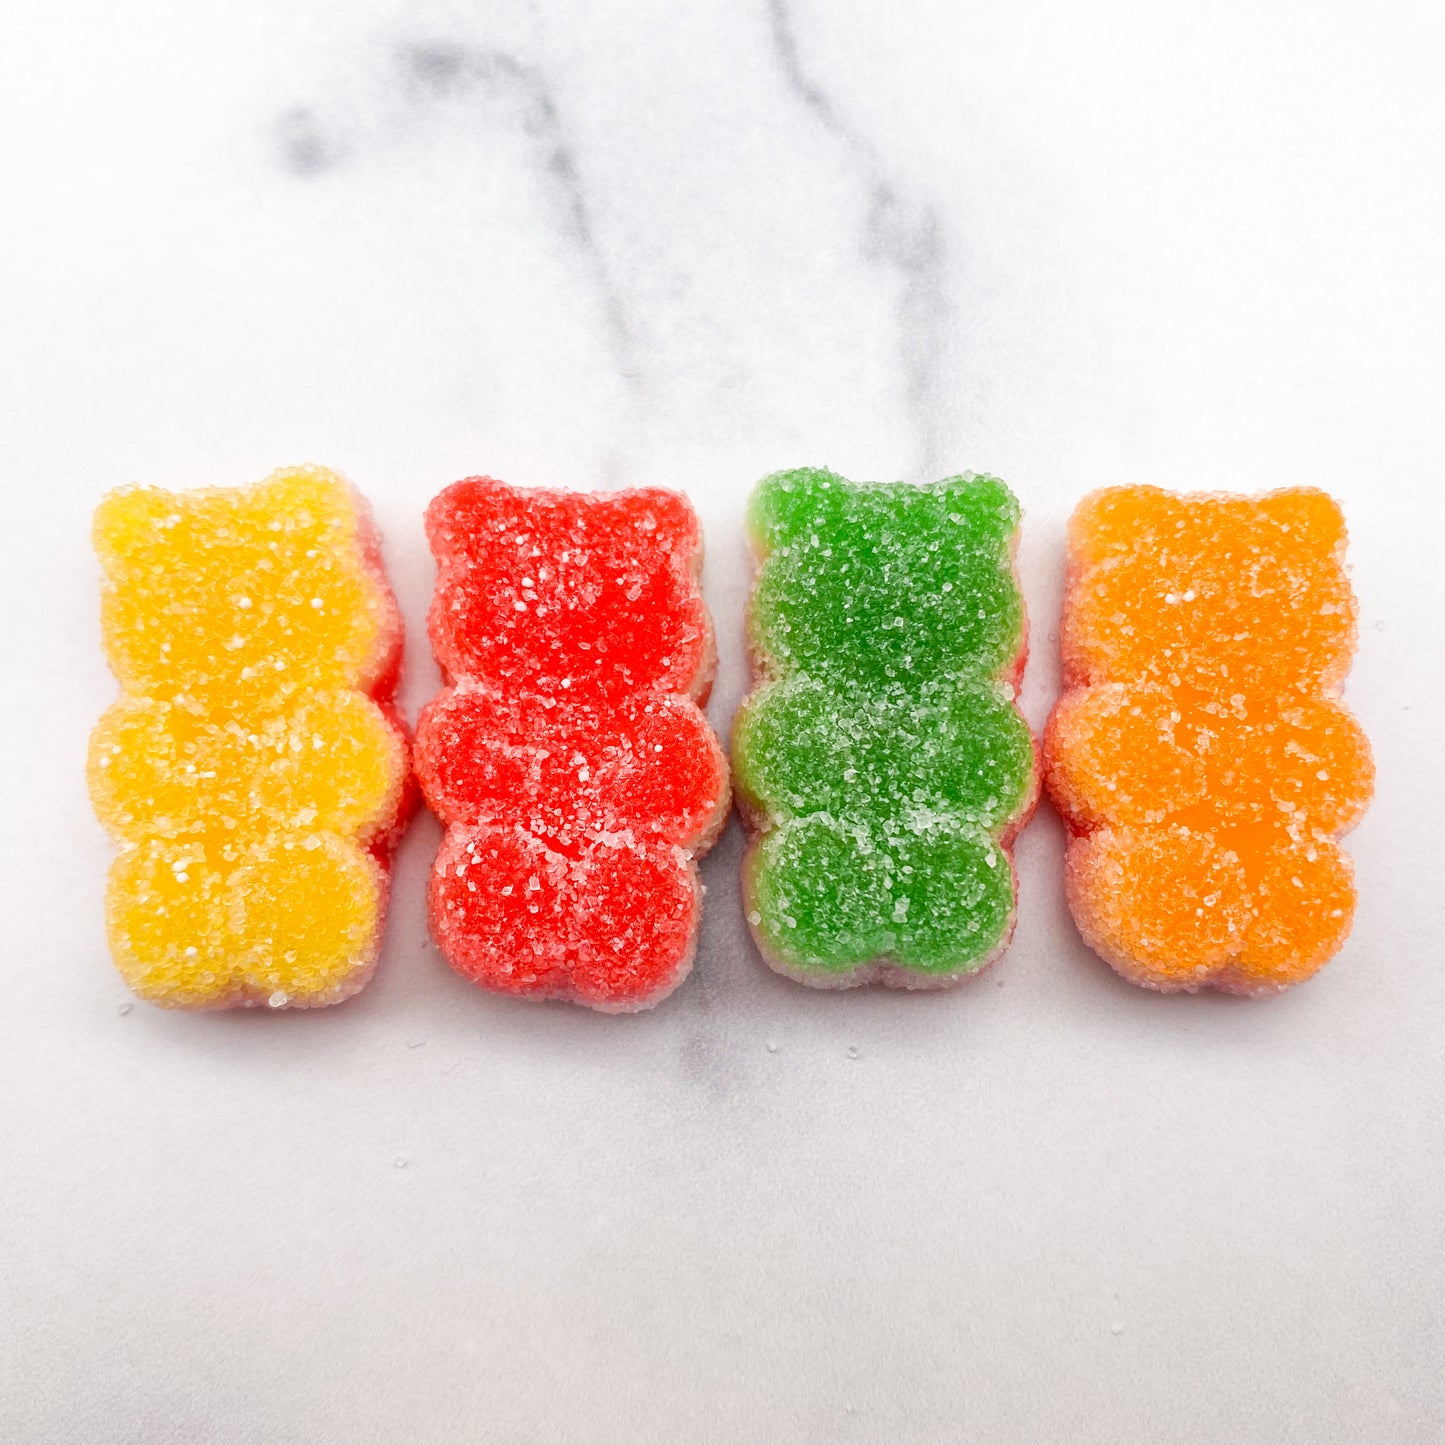 Gummi Bears - Sour Triple